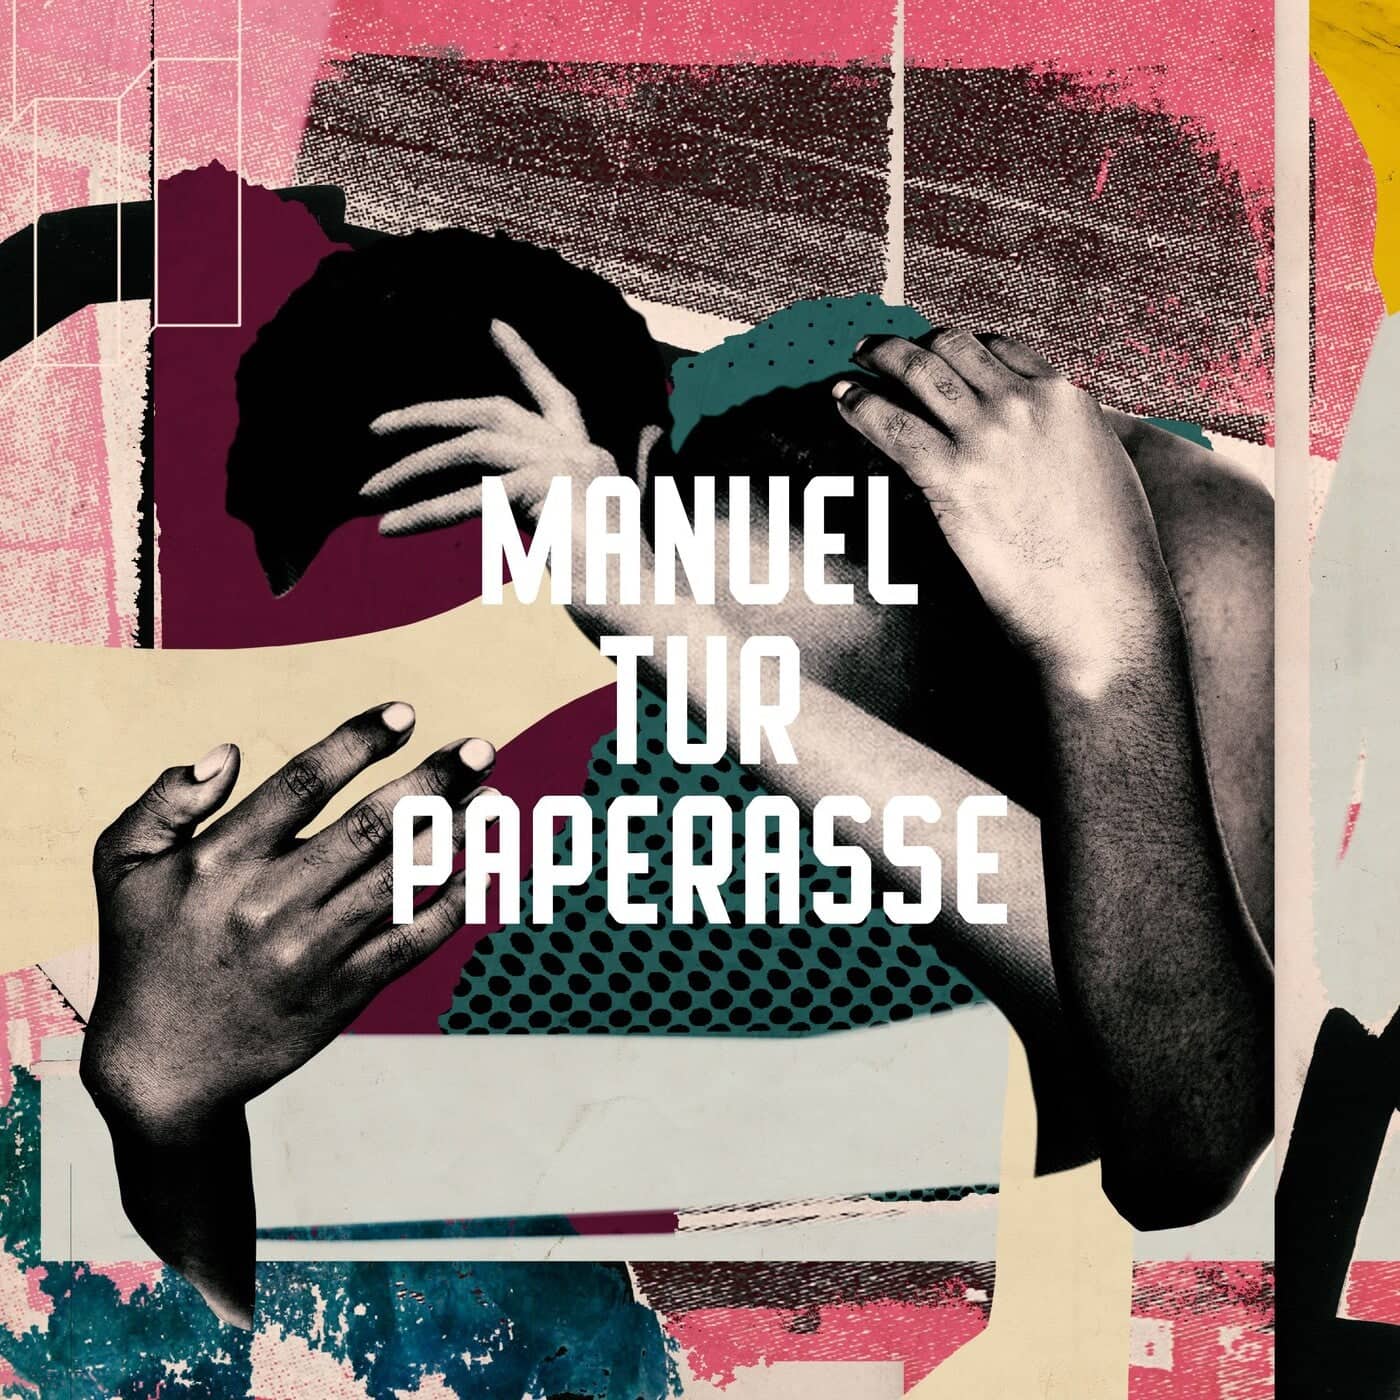 Download Manuel Tur - Paperasse on Electrobuzz